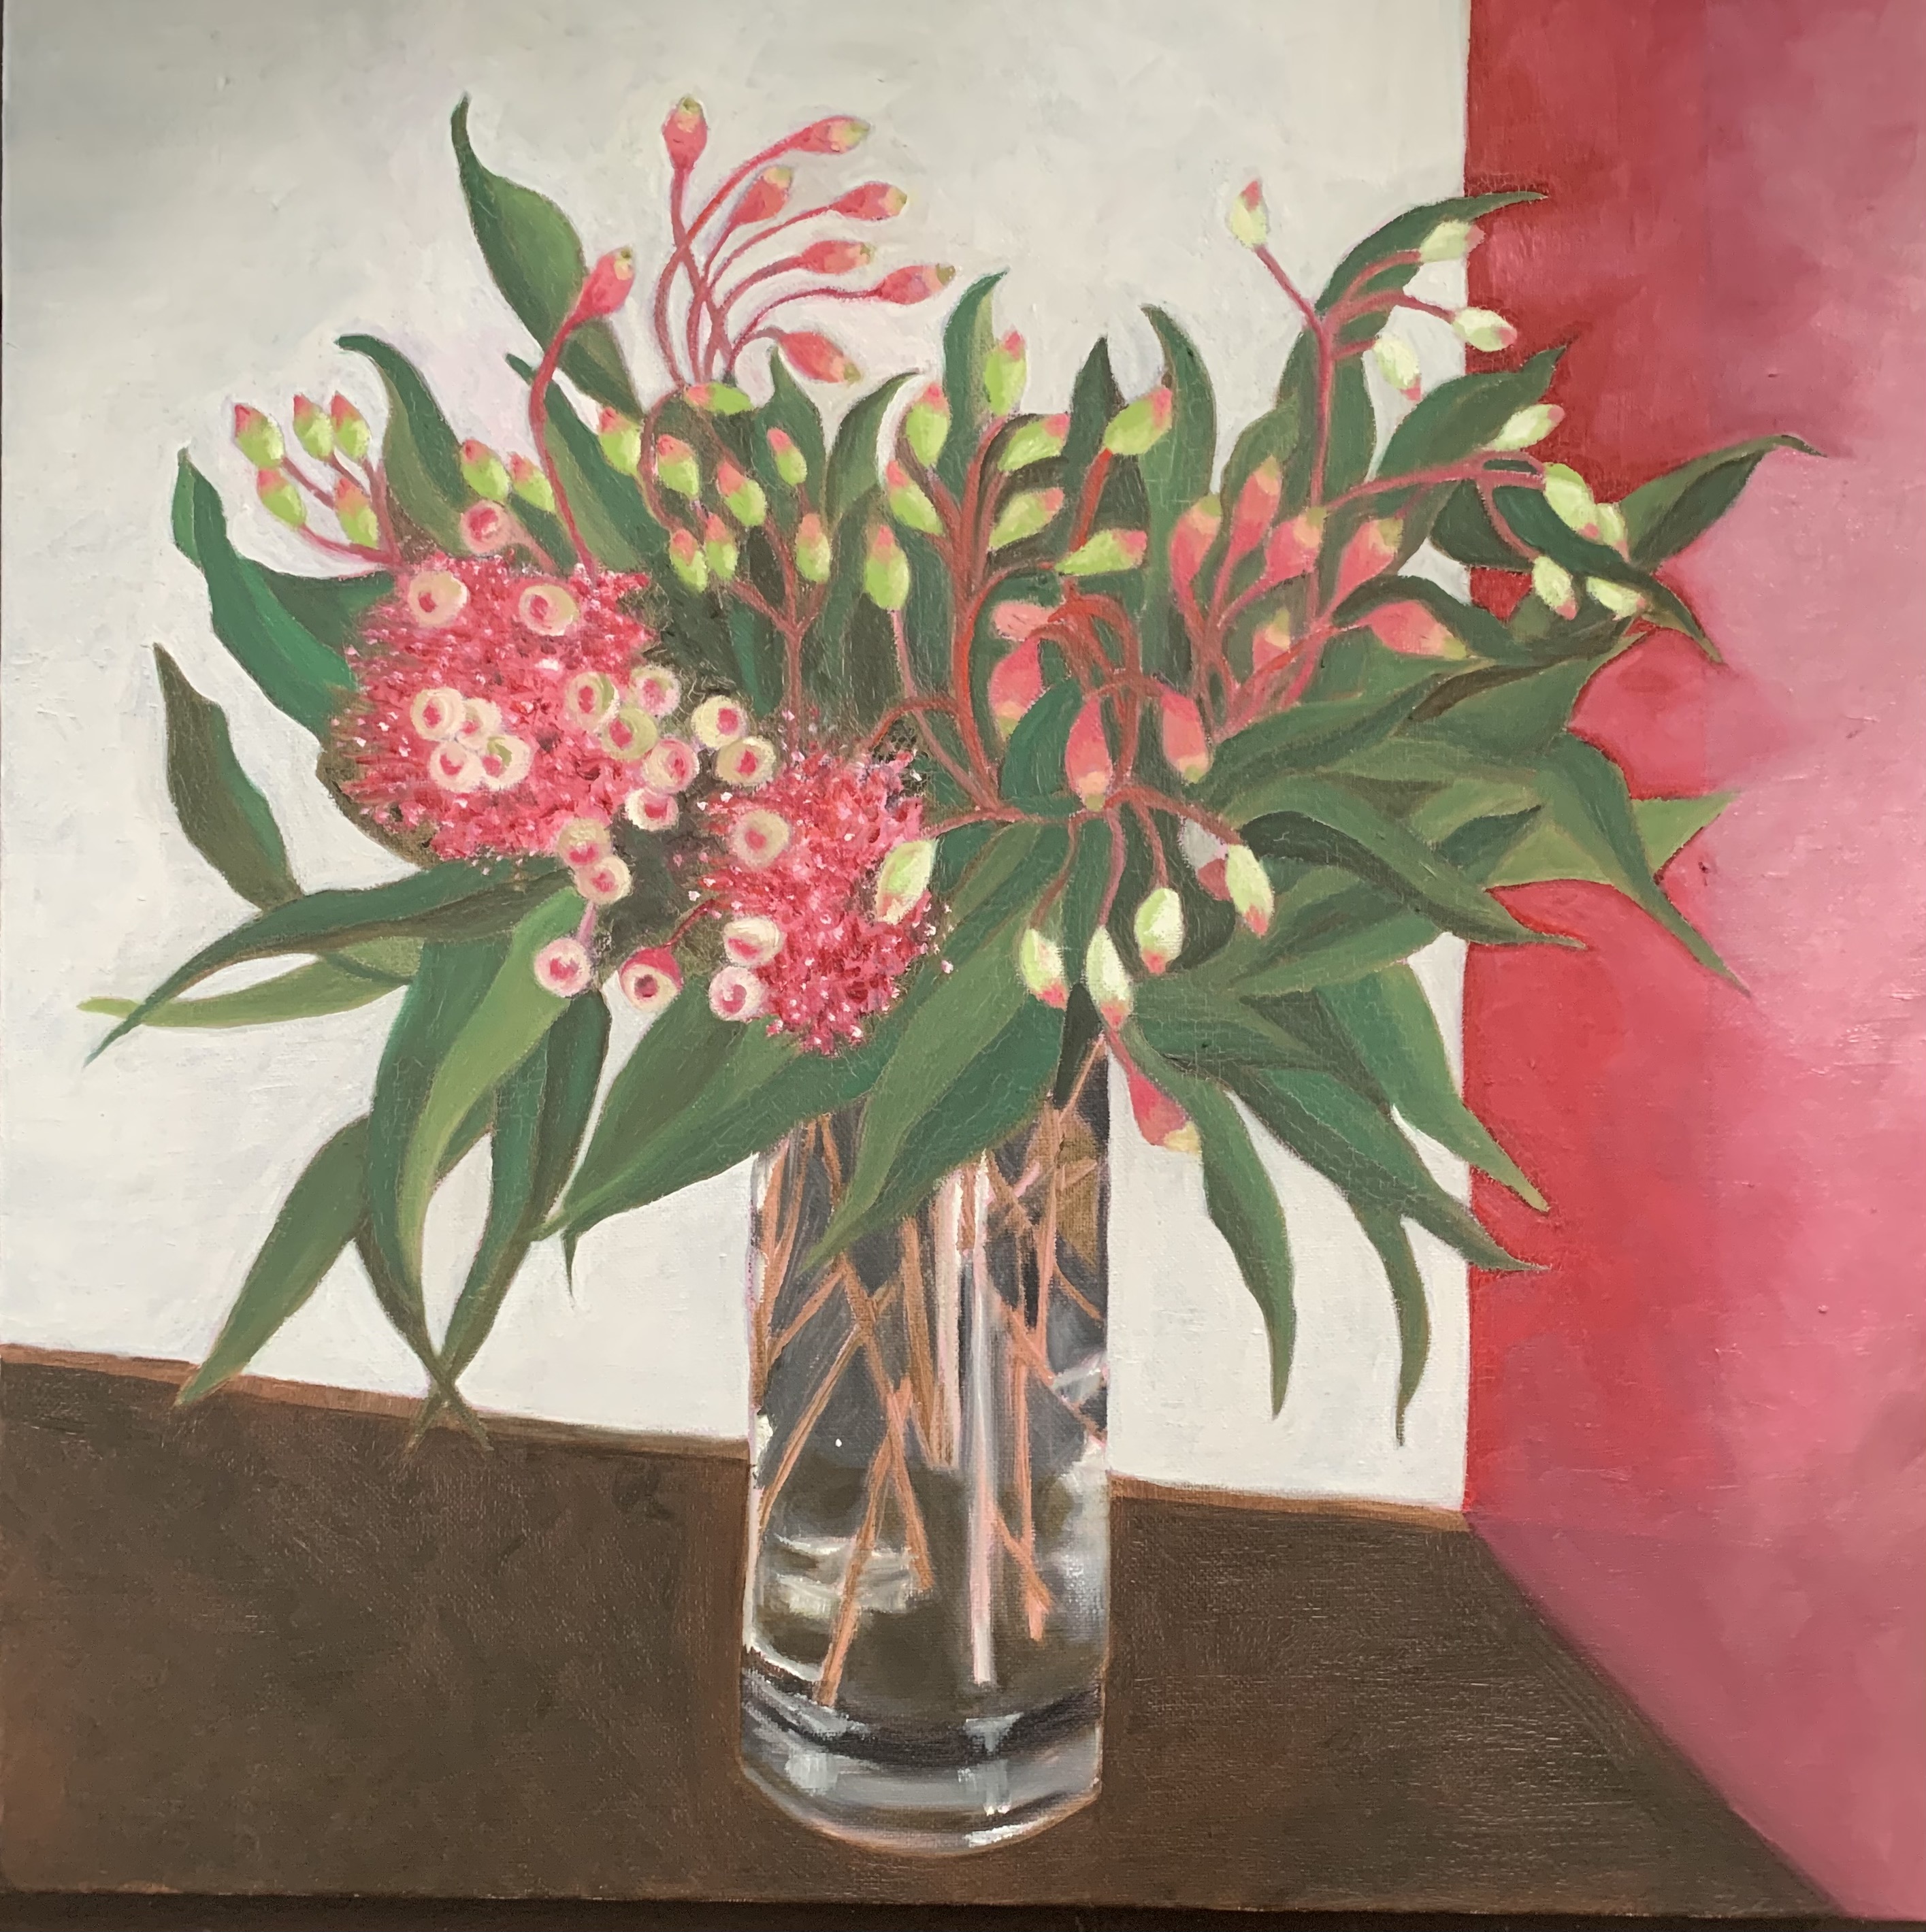 Heart Flowers by Sue Tregeagle | Lethbridge 20000 2022 Finalists | Lethbridge Gallery